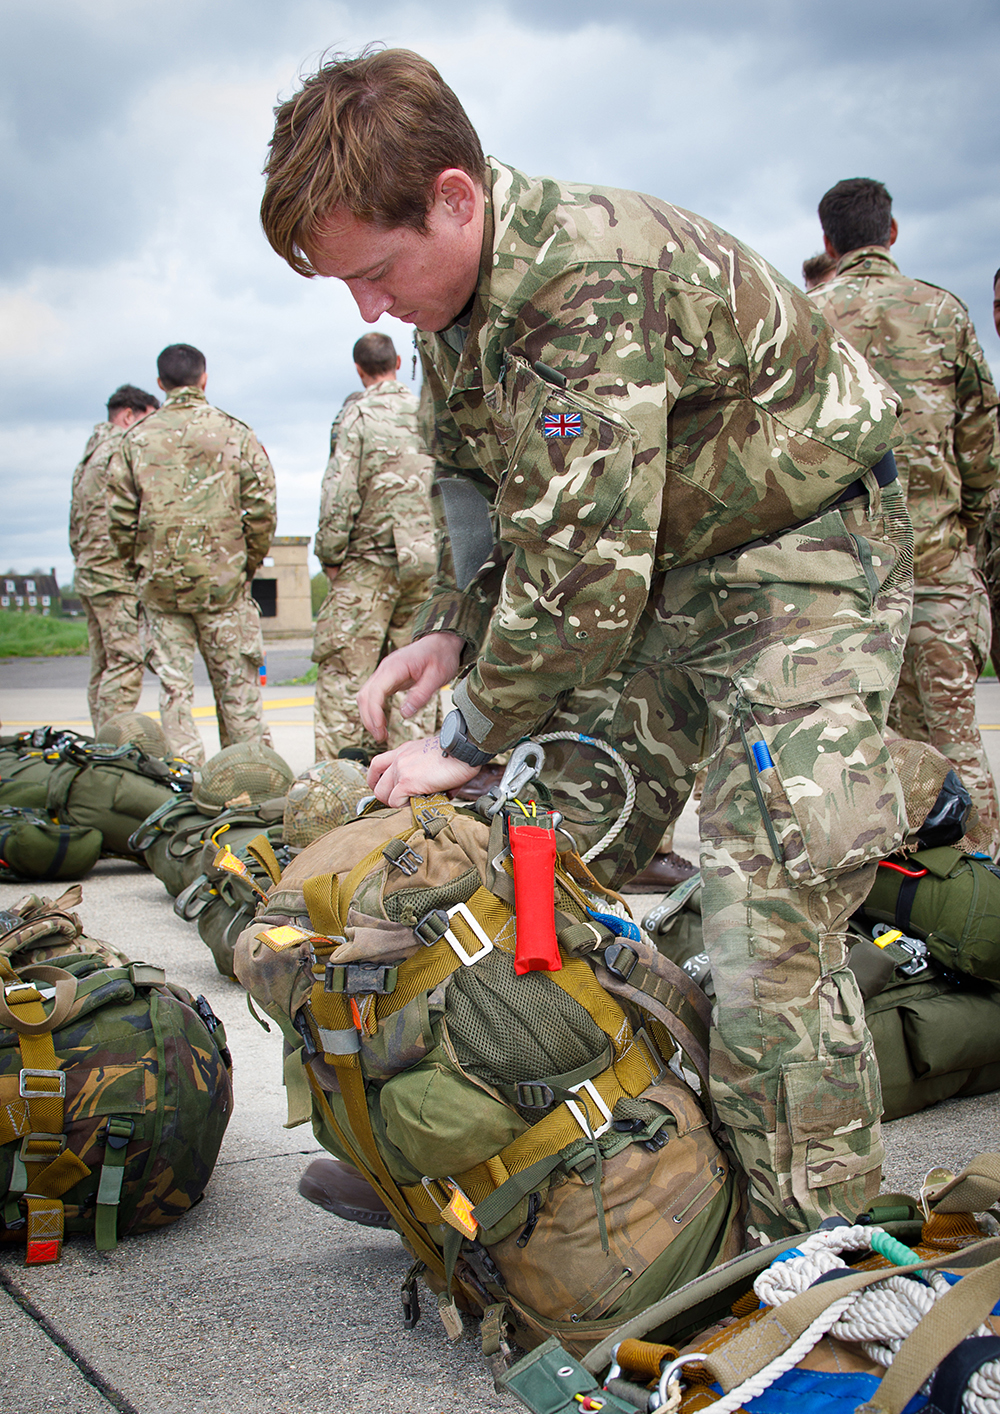 A Parachute Training Squadron Senior NCO carrying out parachute checks